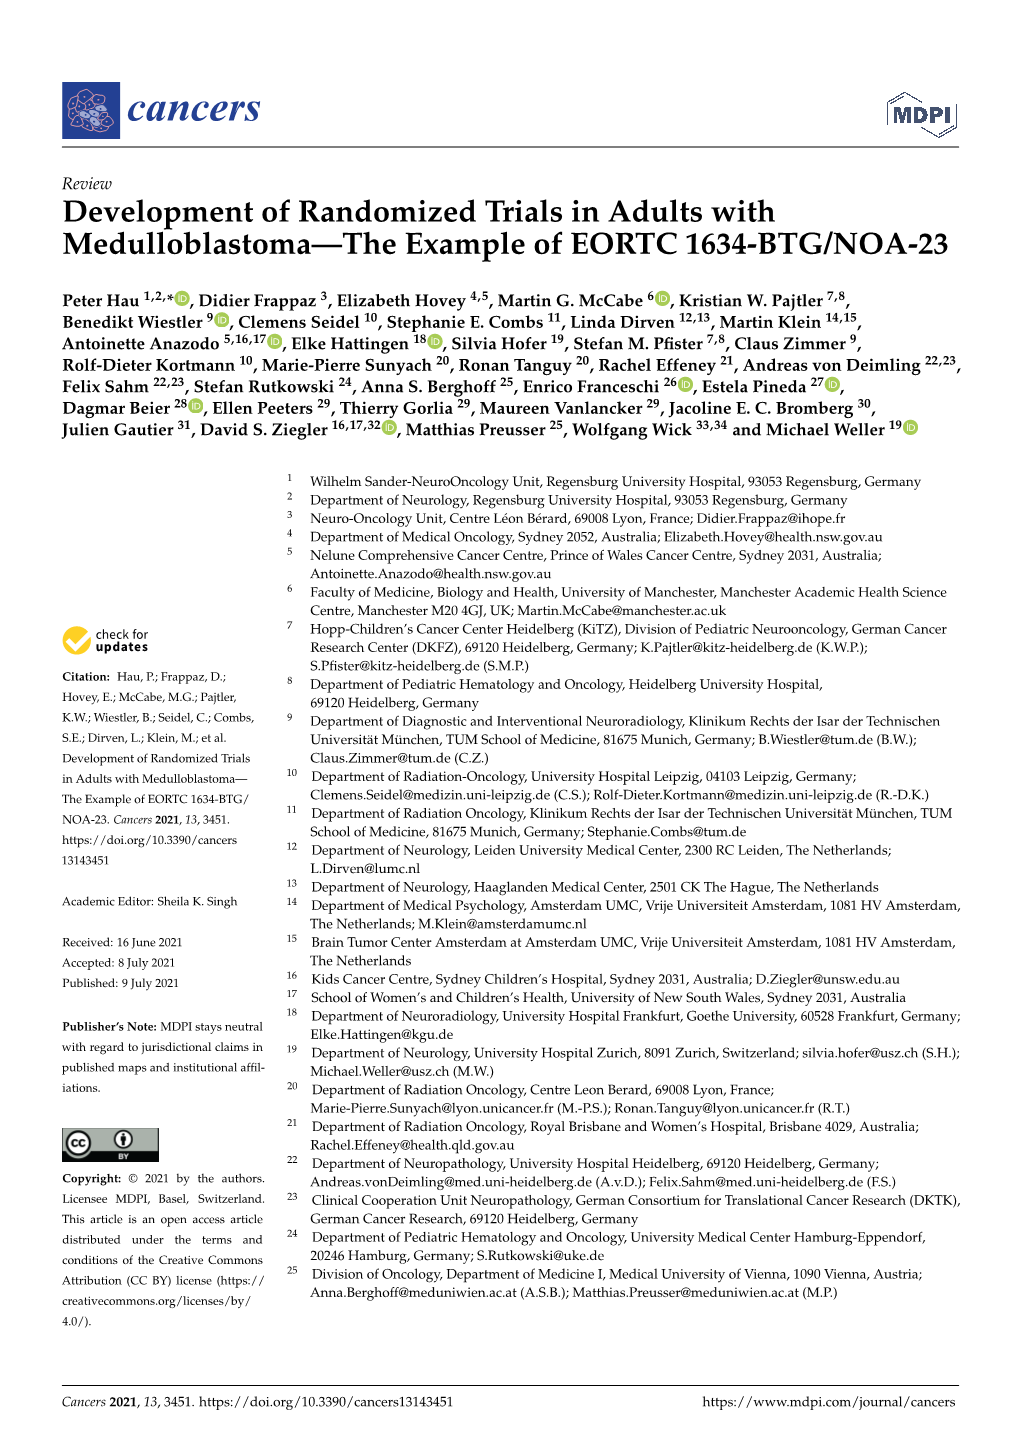 Development of Randomized Trials in Adults with Medulloblastoma—The Example of EORTC 1634-BTG/NOA-23